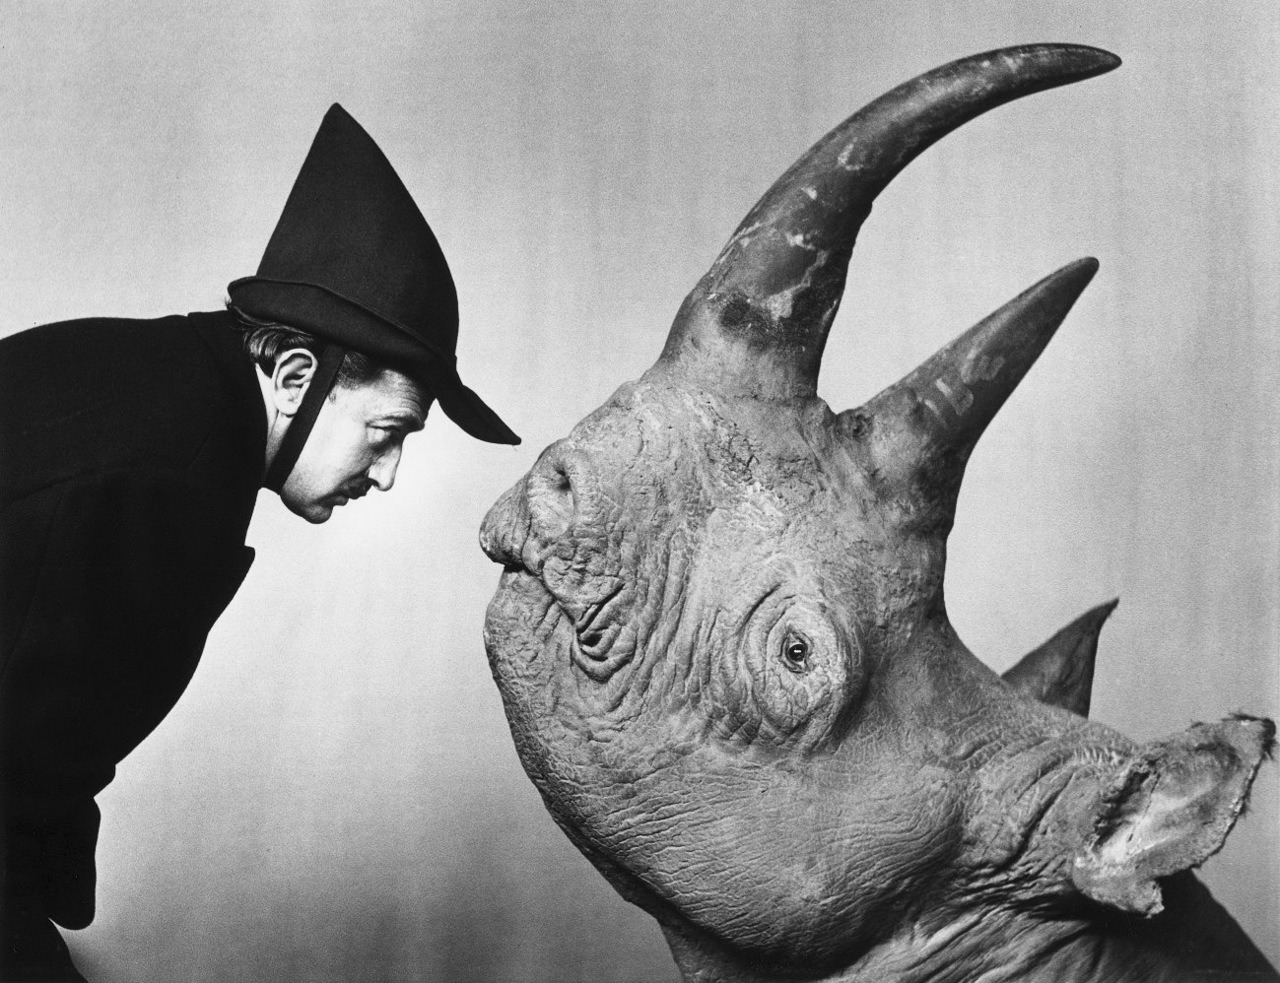 amass-musing:
“ Salvador Dali & Rhinoceros, by Philippe Halsman
”